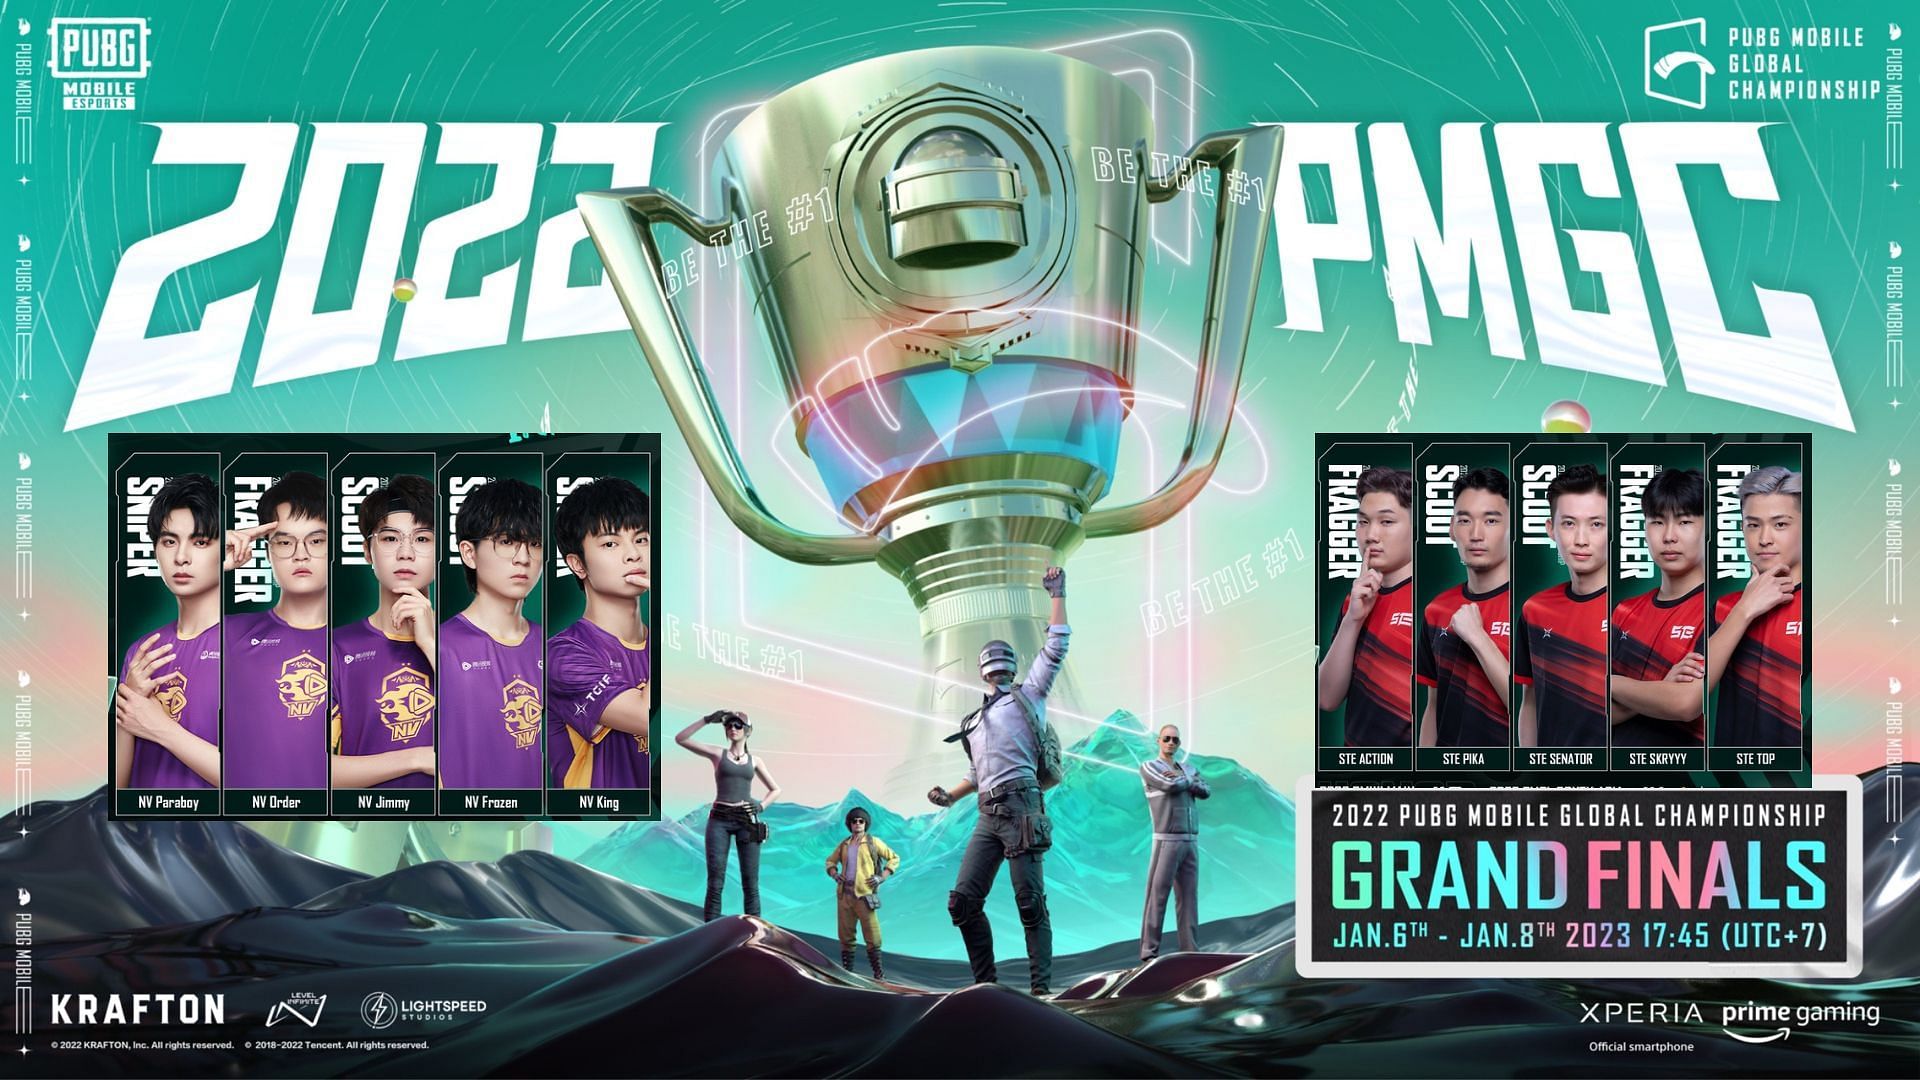 PMGC 2022 Grand Finals Features 18 matches (Image via Sportskeeda)